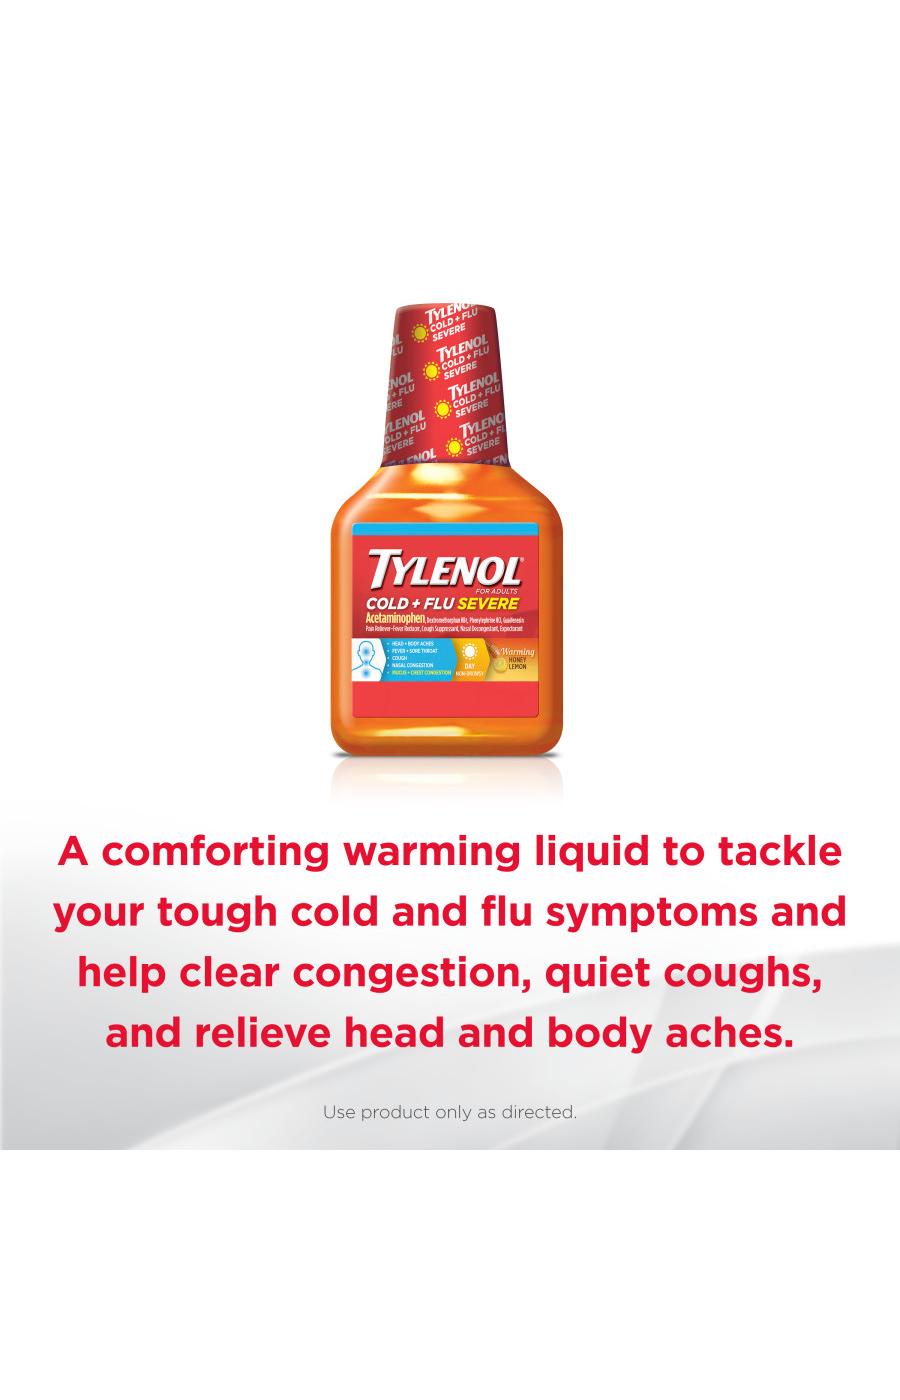 Tylenol Cold + Flu Severe Daytime Liquid - Warming Honey Lemon; image 2 of 3